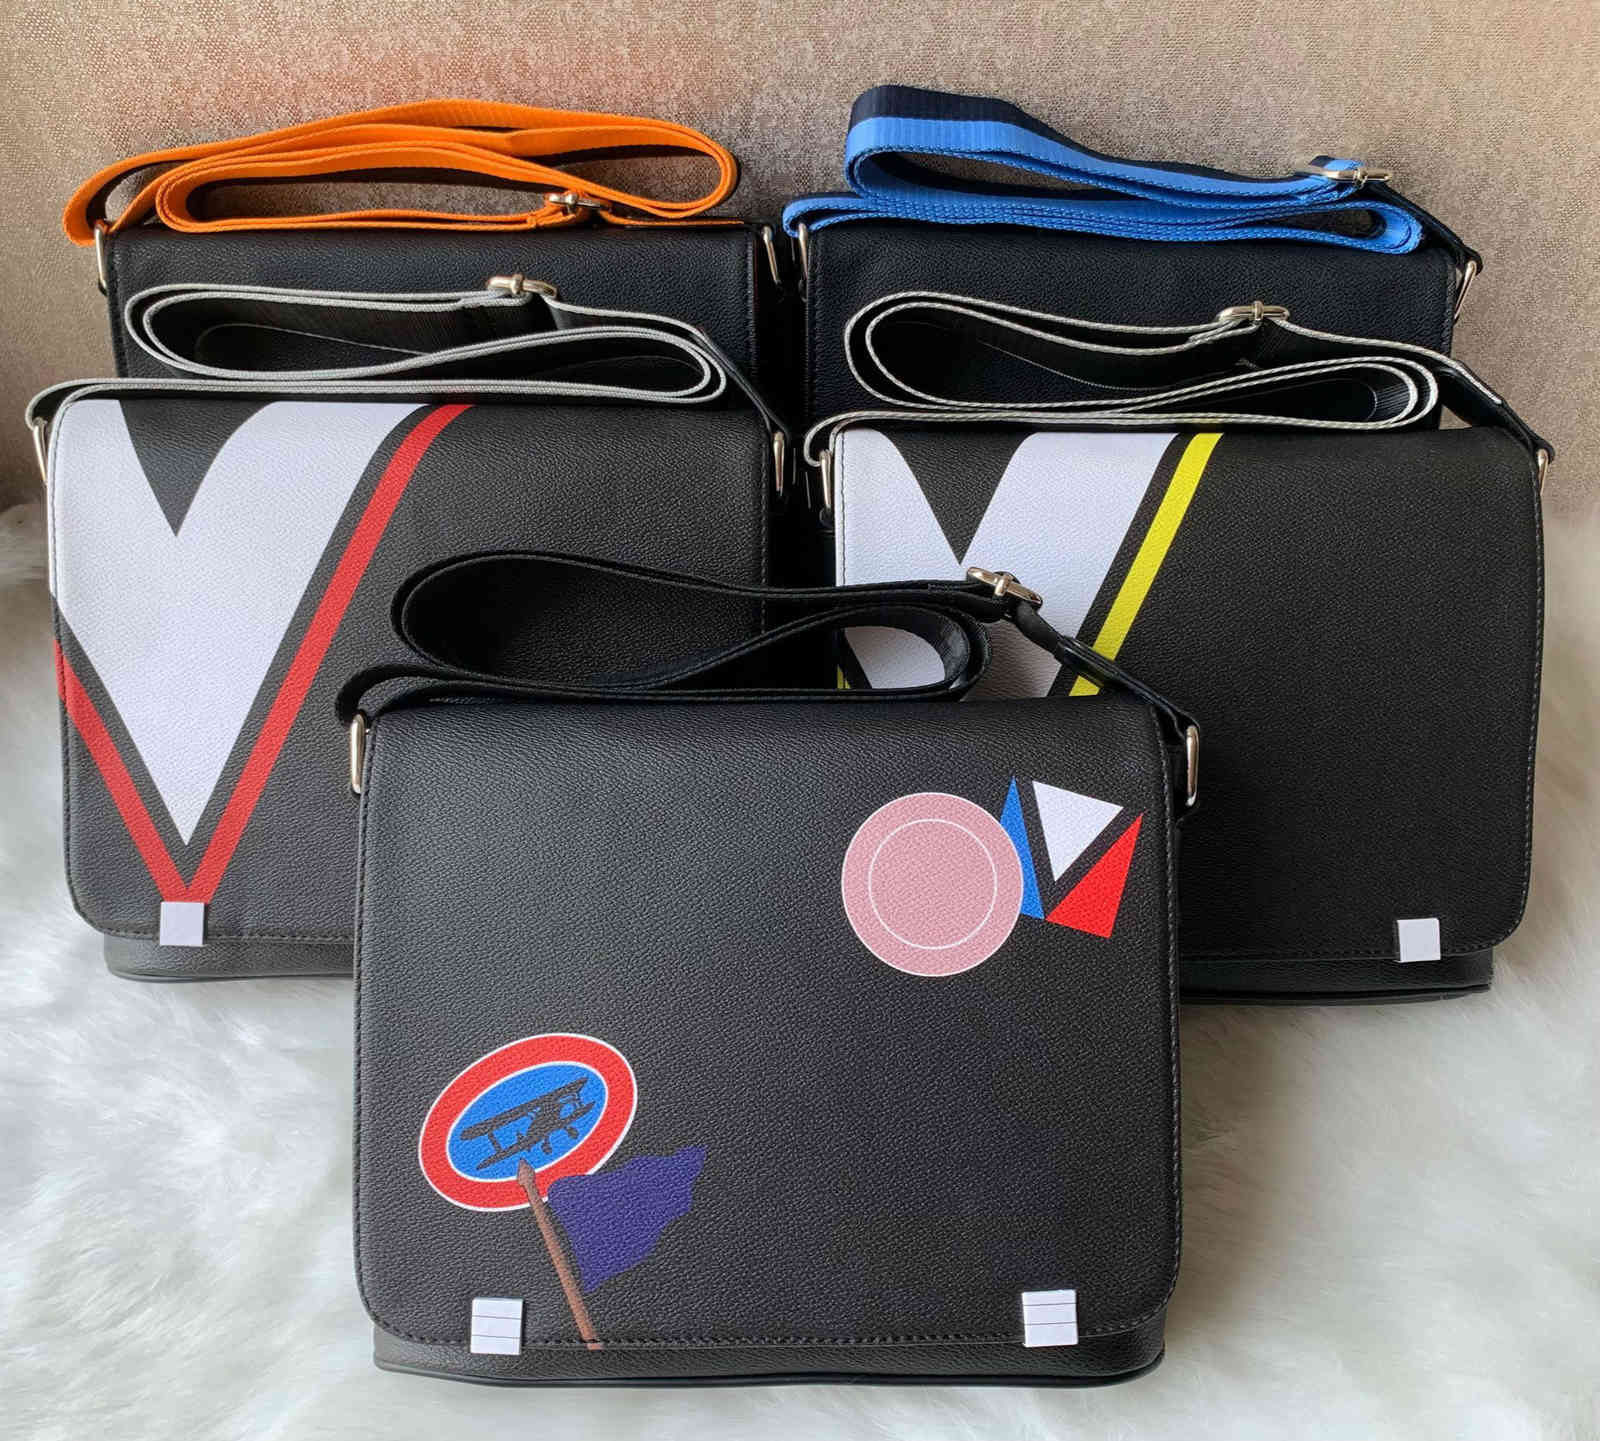 

bag Cross Body mikoms Brand Classic designer 2019 new fashion Men messenger bags cross body bag school bookbag shouldER handbags man purse hot sell, Black